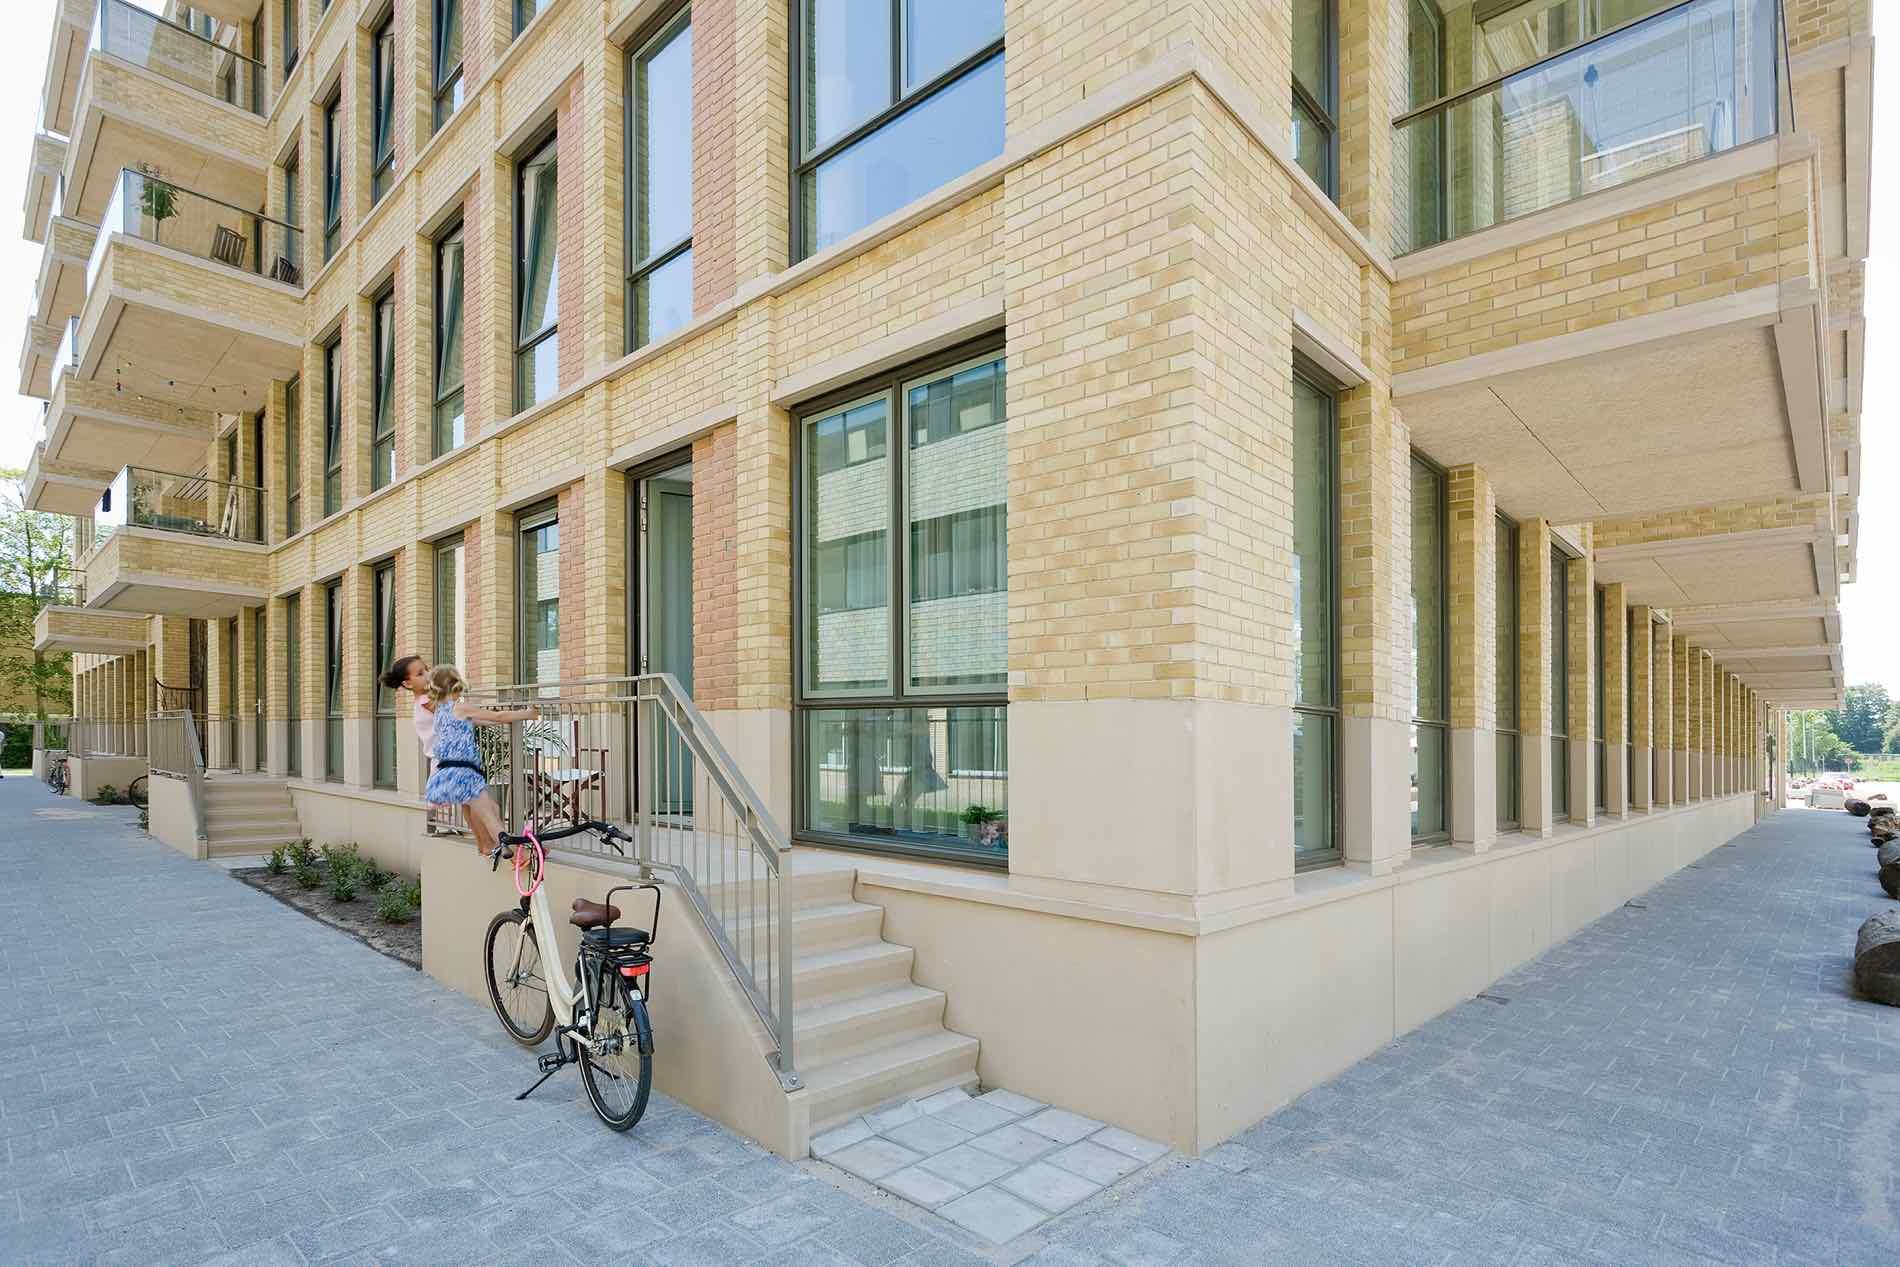 Appartementen Square 4, Amsterdam - LEVS architecten